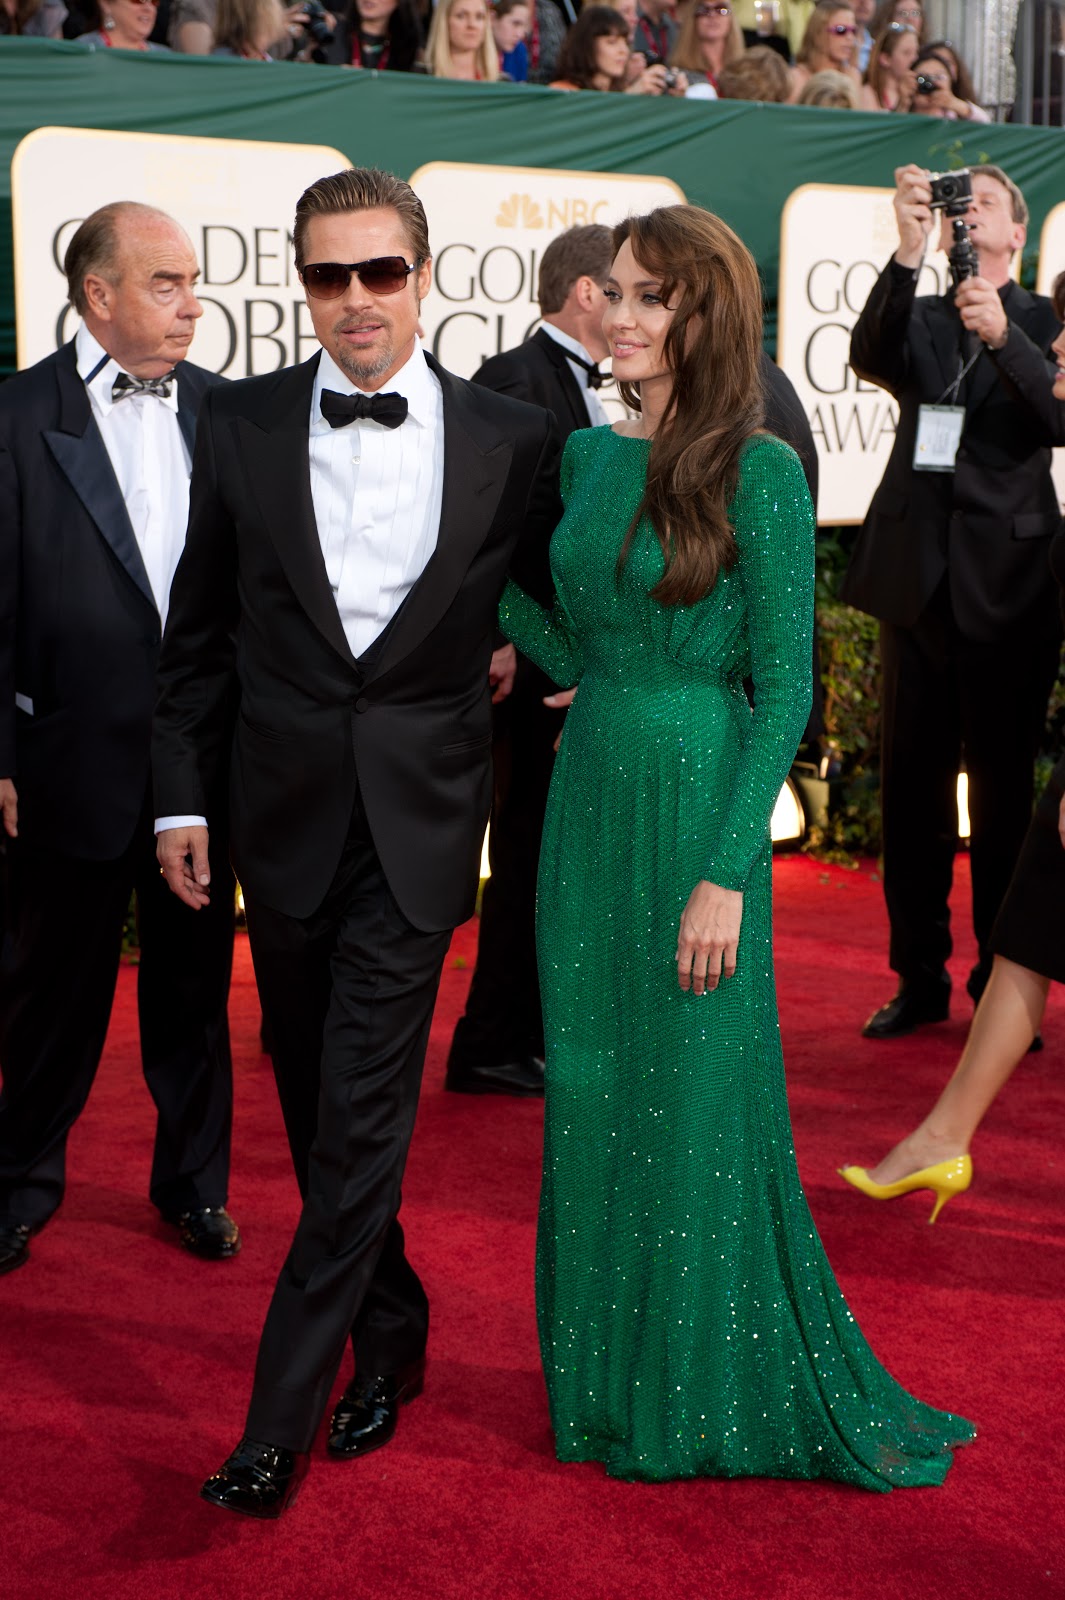 http://1.bp.blogspot.com/_nyB2OeEAzKU/TTcLw6Je3lI/AAAAAAAATL8/WDbuoZLofpg/s1600/2011+Golden+Globes+68th+men+Brad+Pitt+and+Angelina+Jolie+in+green+dress.jpg